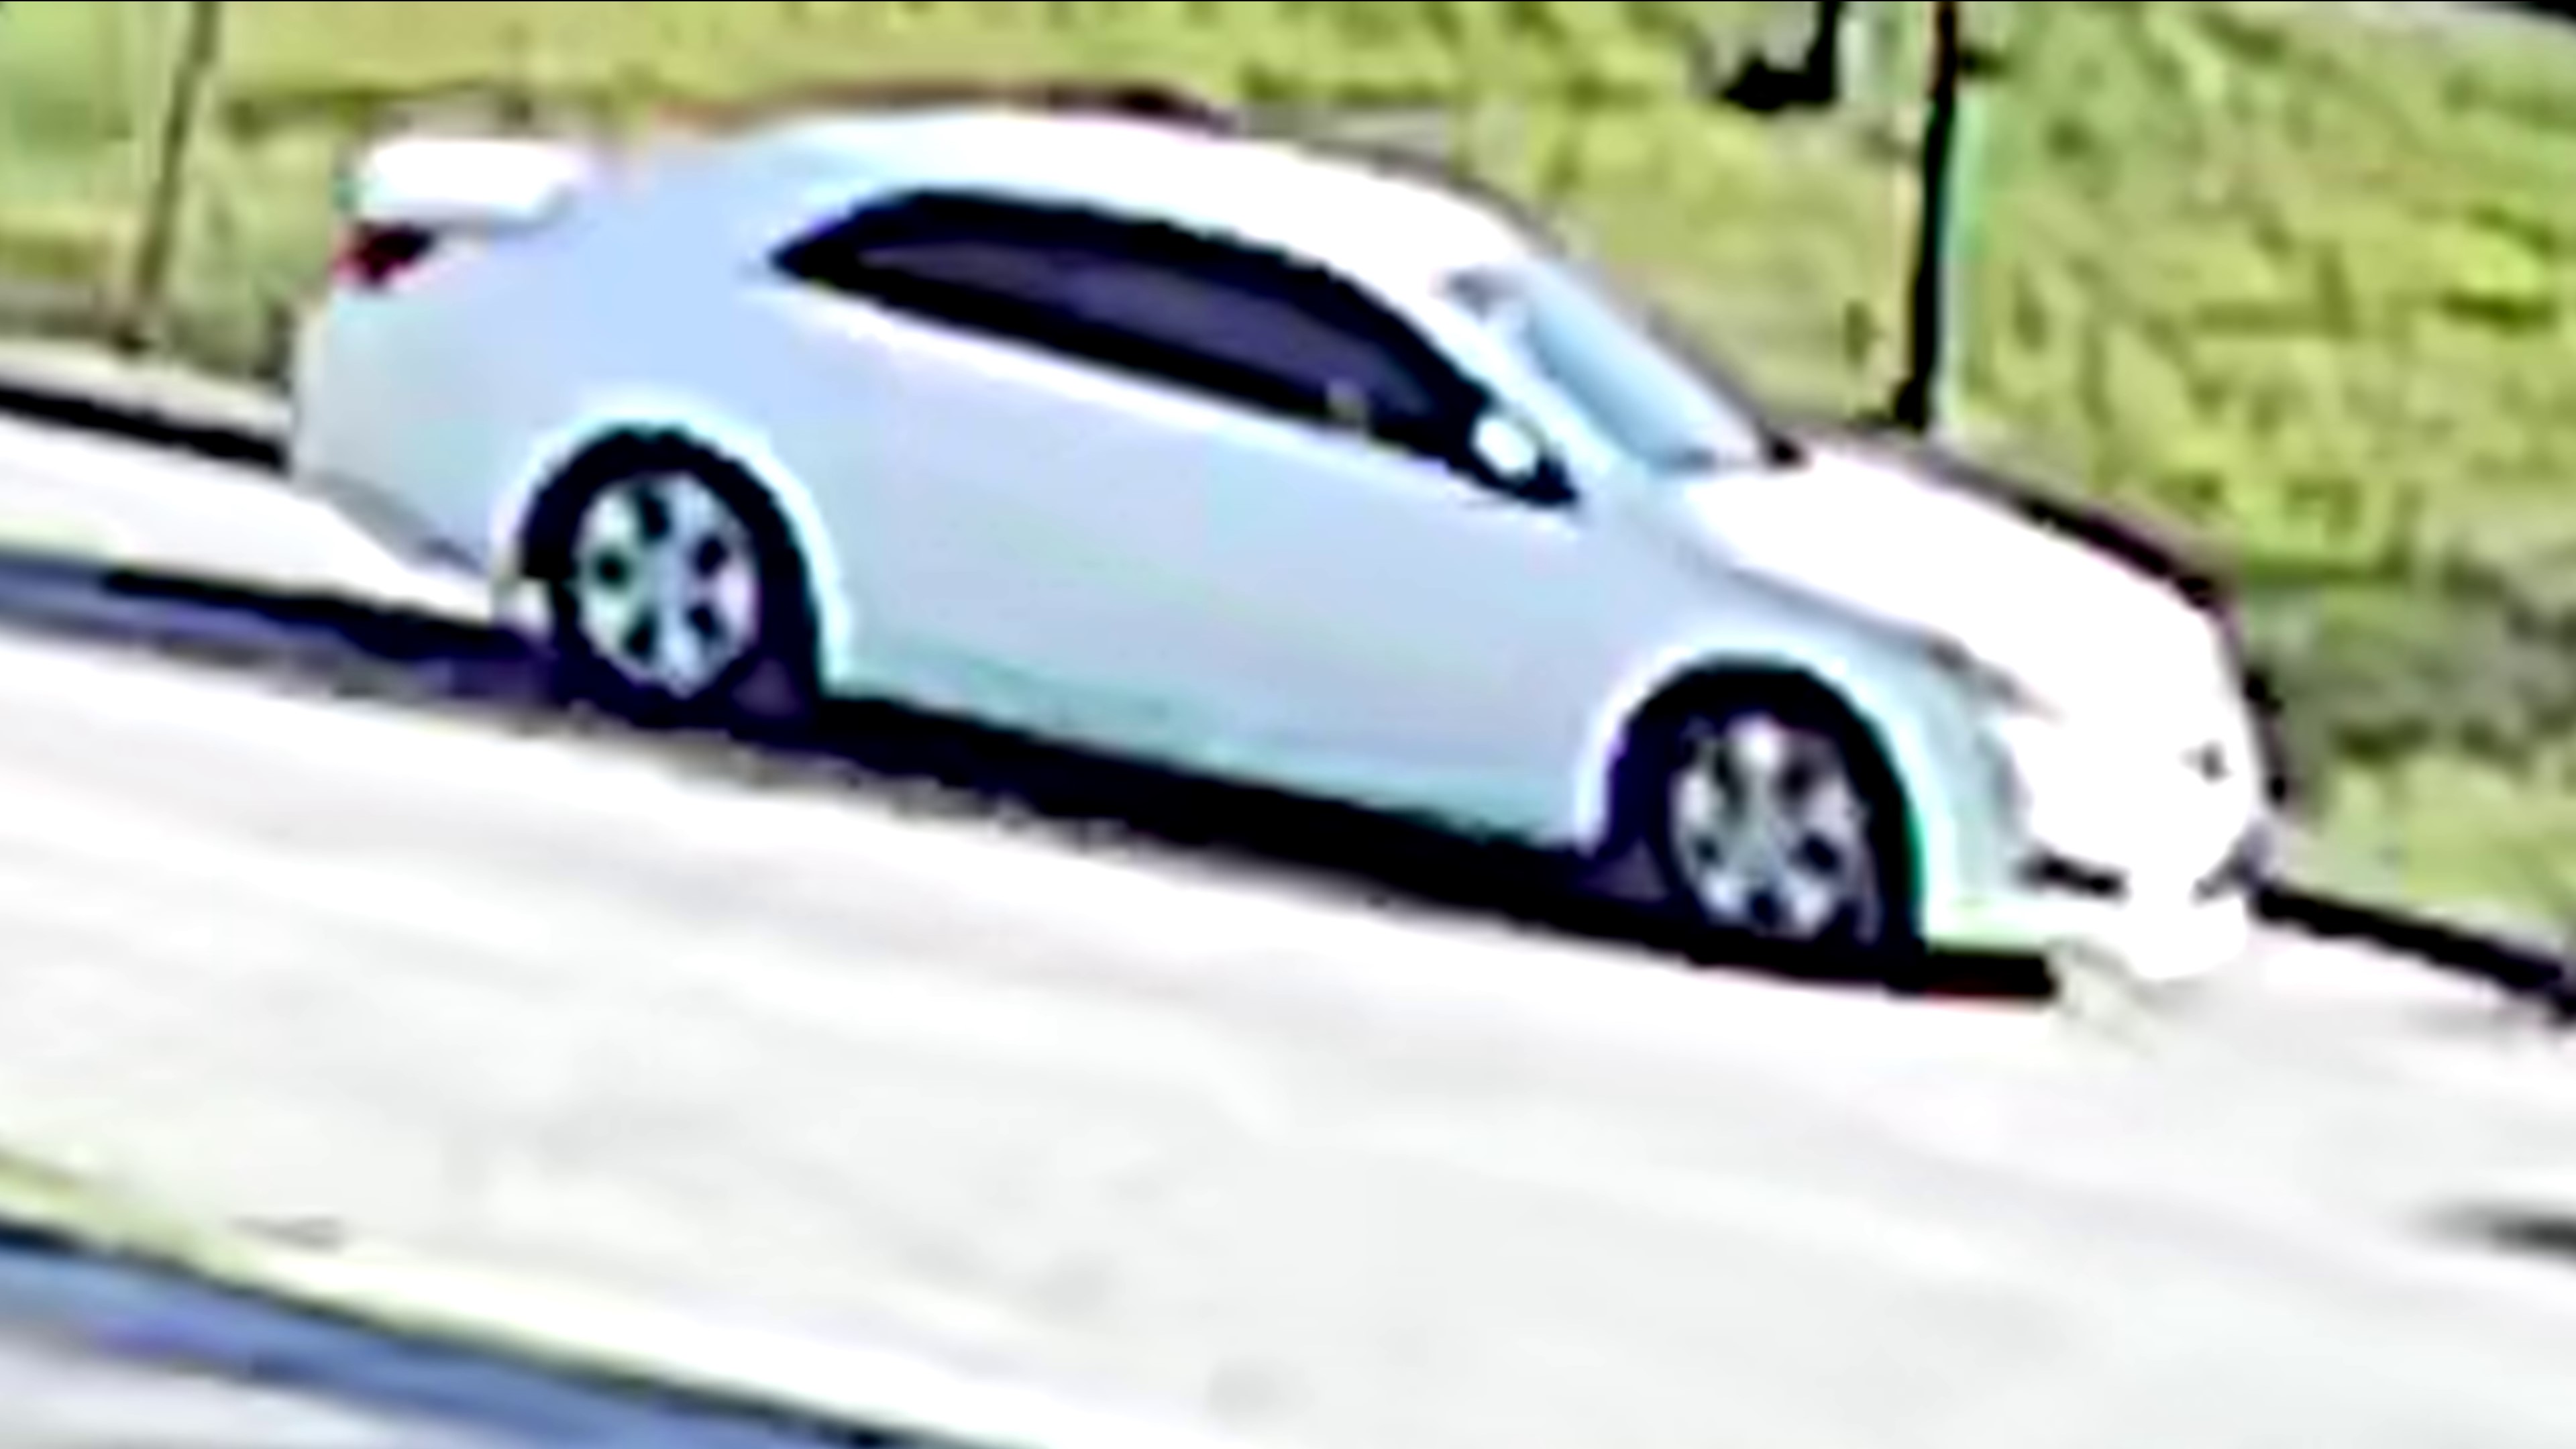 surveillance photo of the vehicle